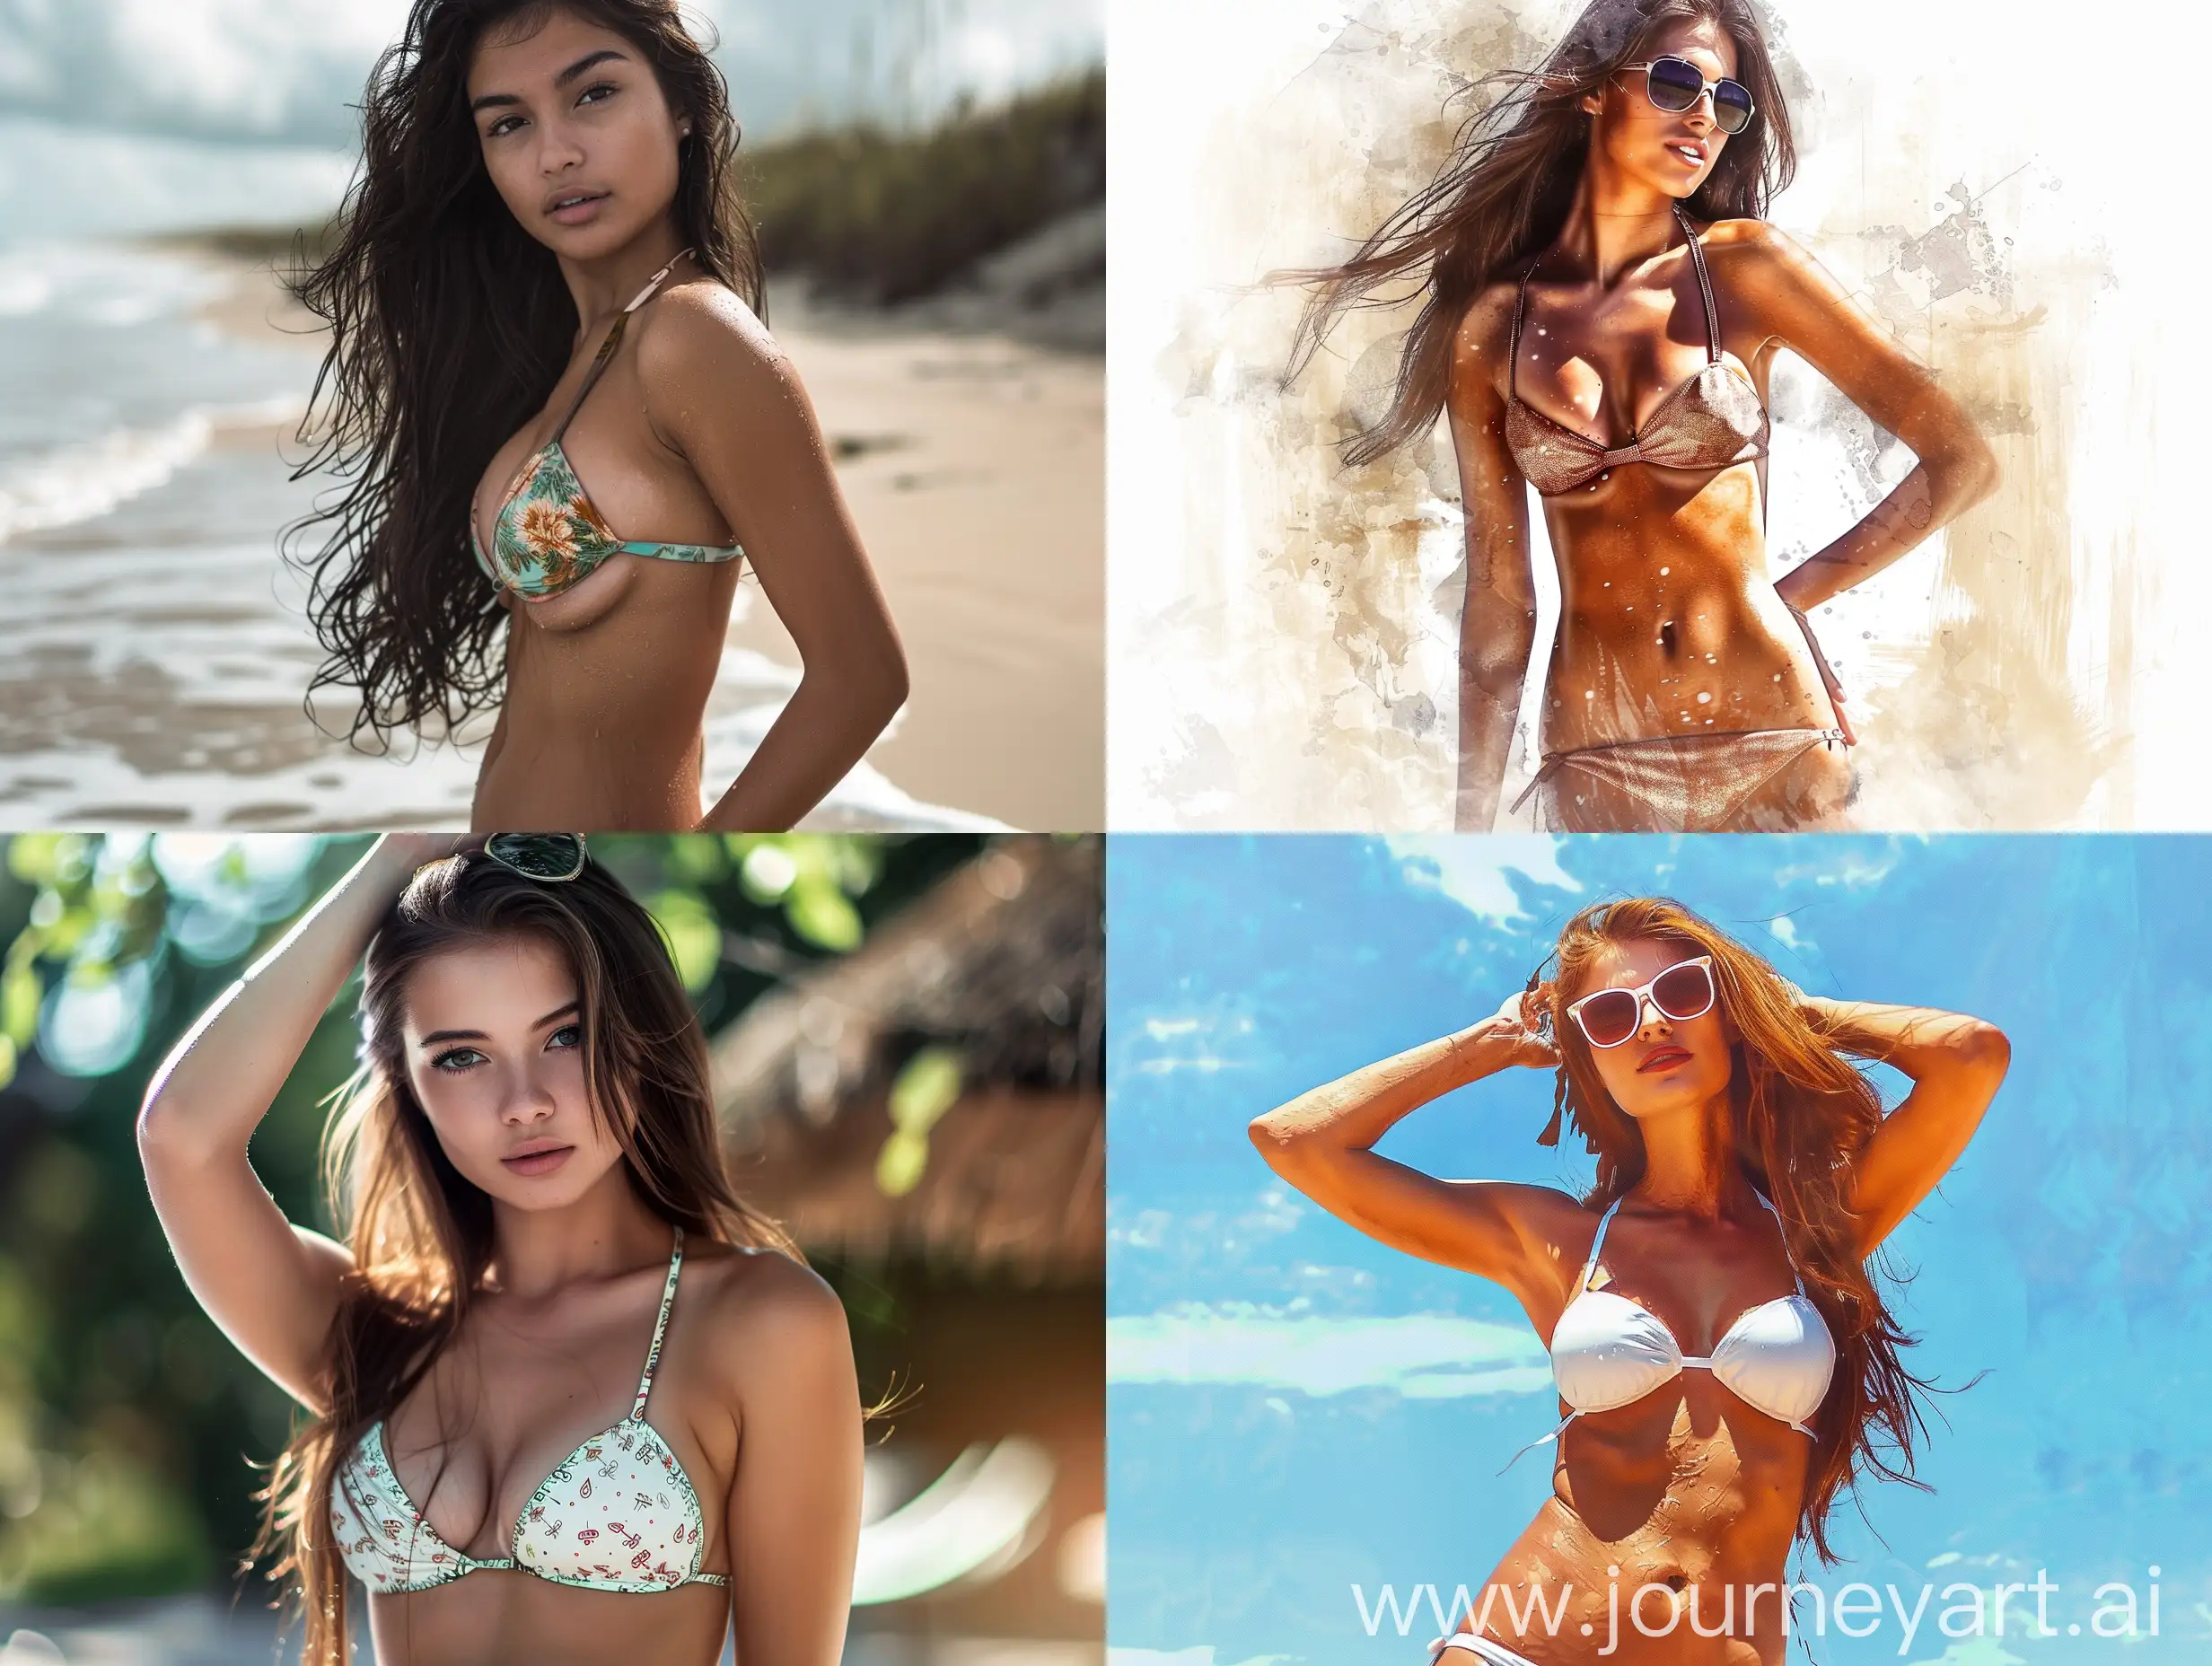 Stunning-Bikini-Model-in-Vibrant-Beach-Scene